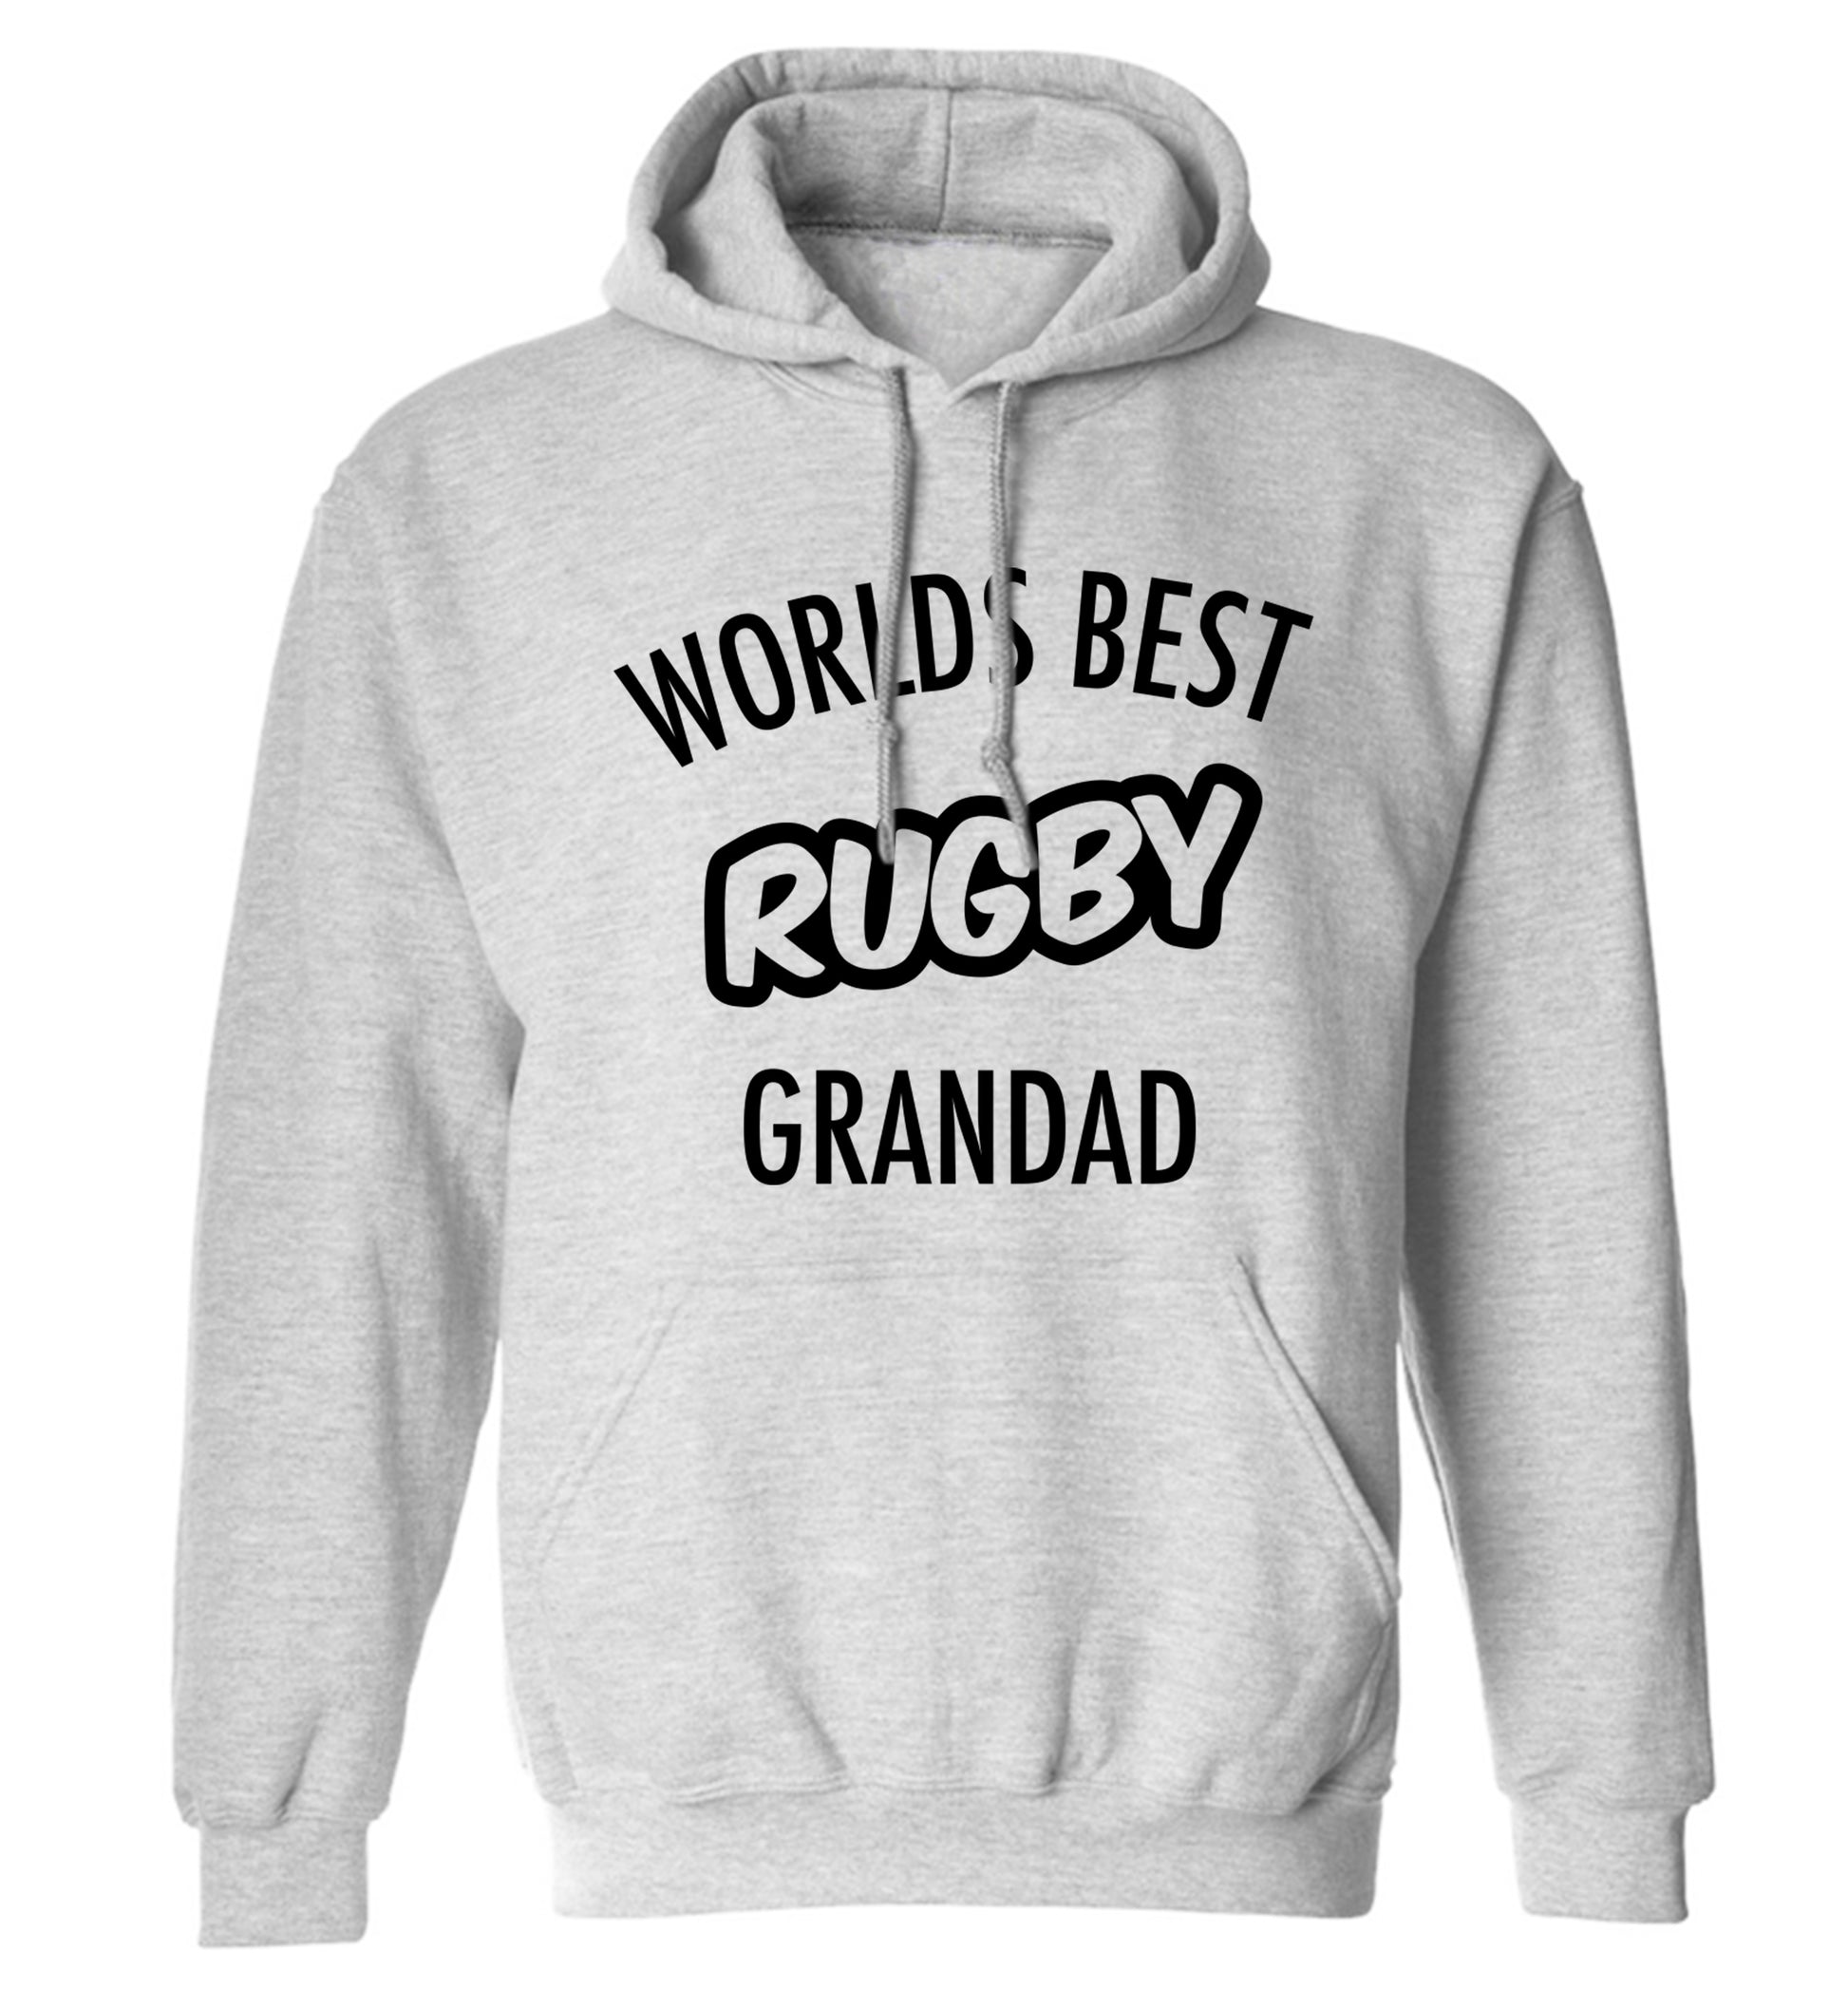 Worlds best rugby grandad adults unisex grey hoodie 2XL